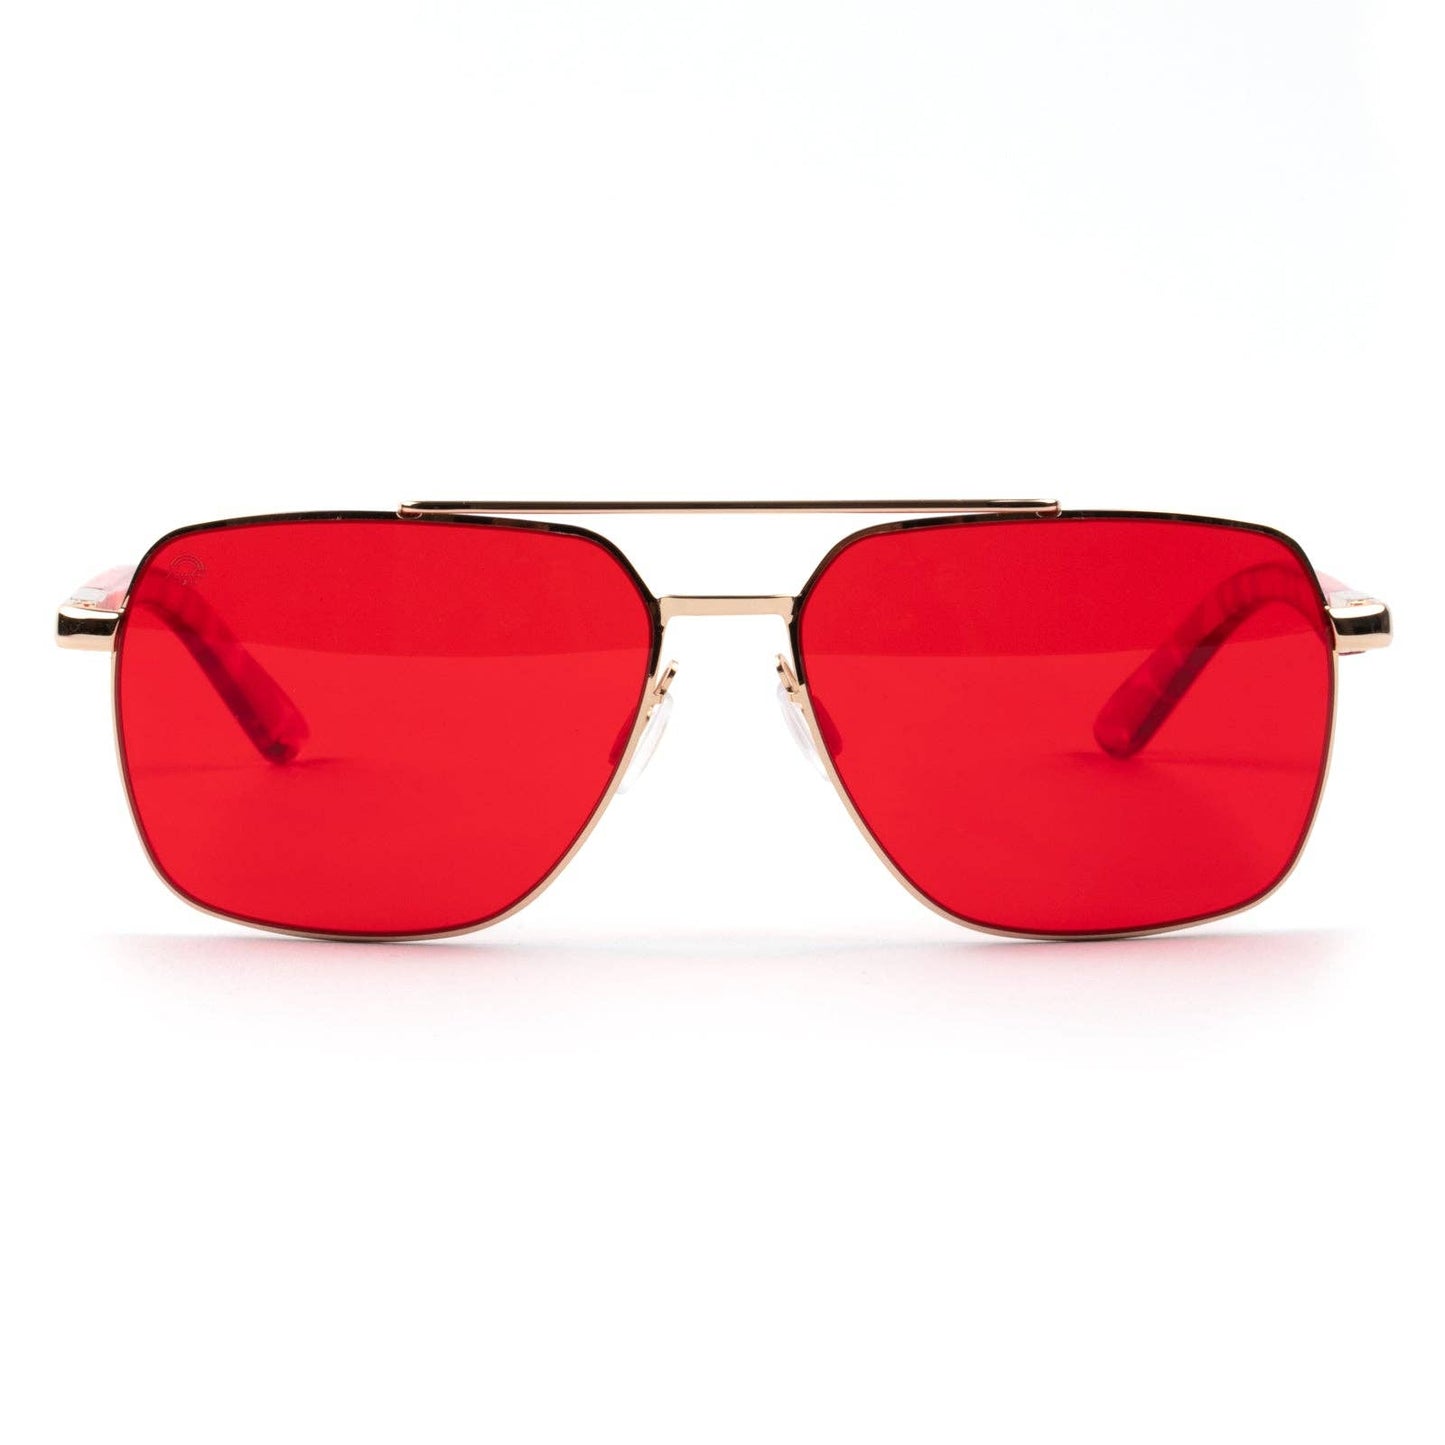 RainbowOPTX Sunglasses Leo - Red-Accessories-Rainbow Optx-Faire-The Twisted Chandelier